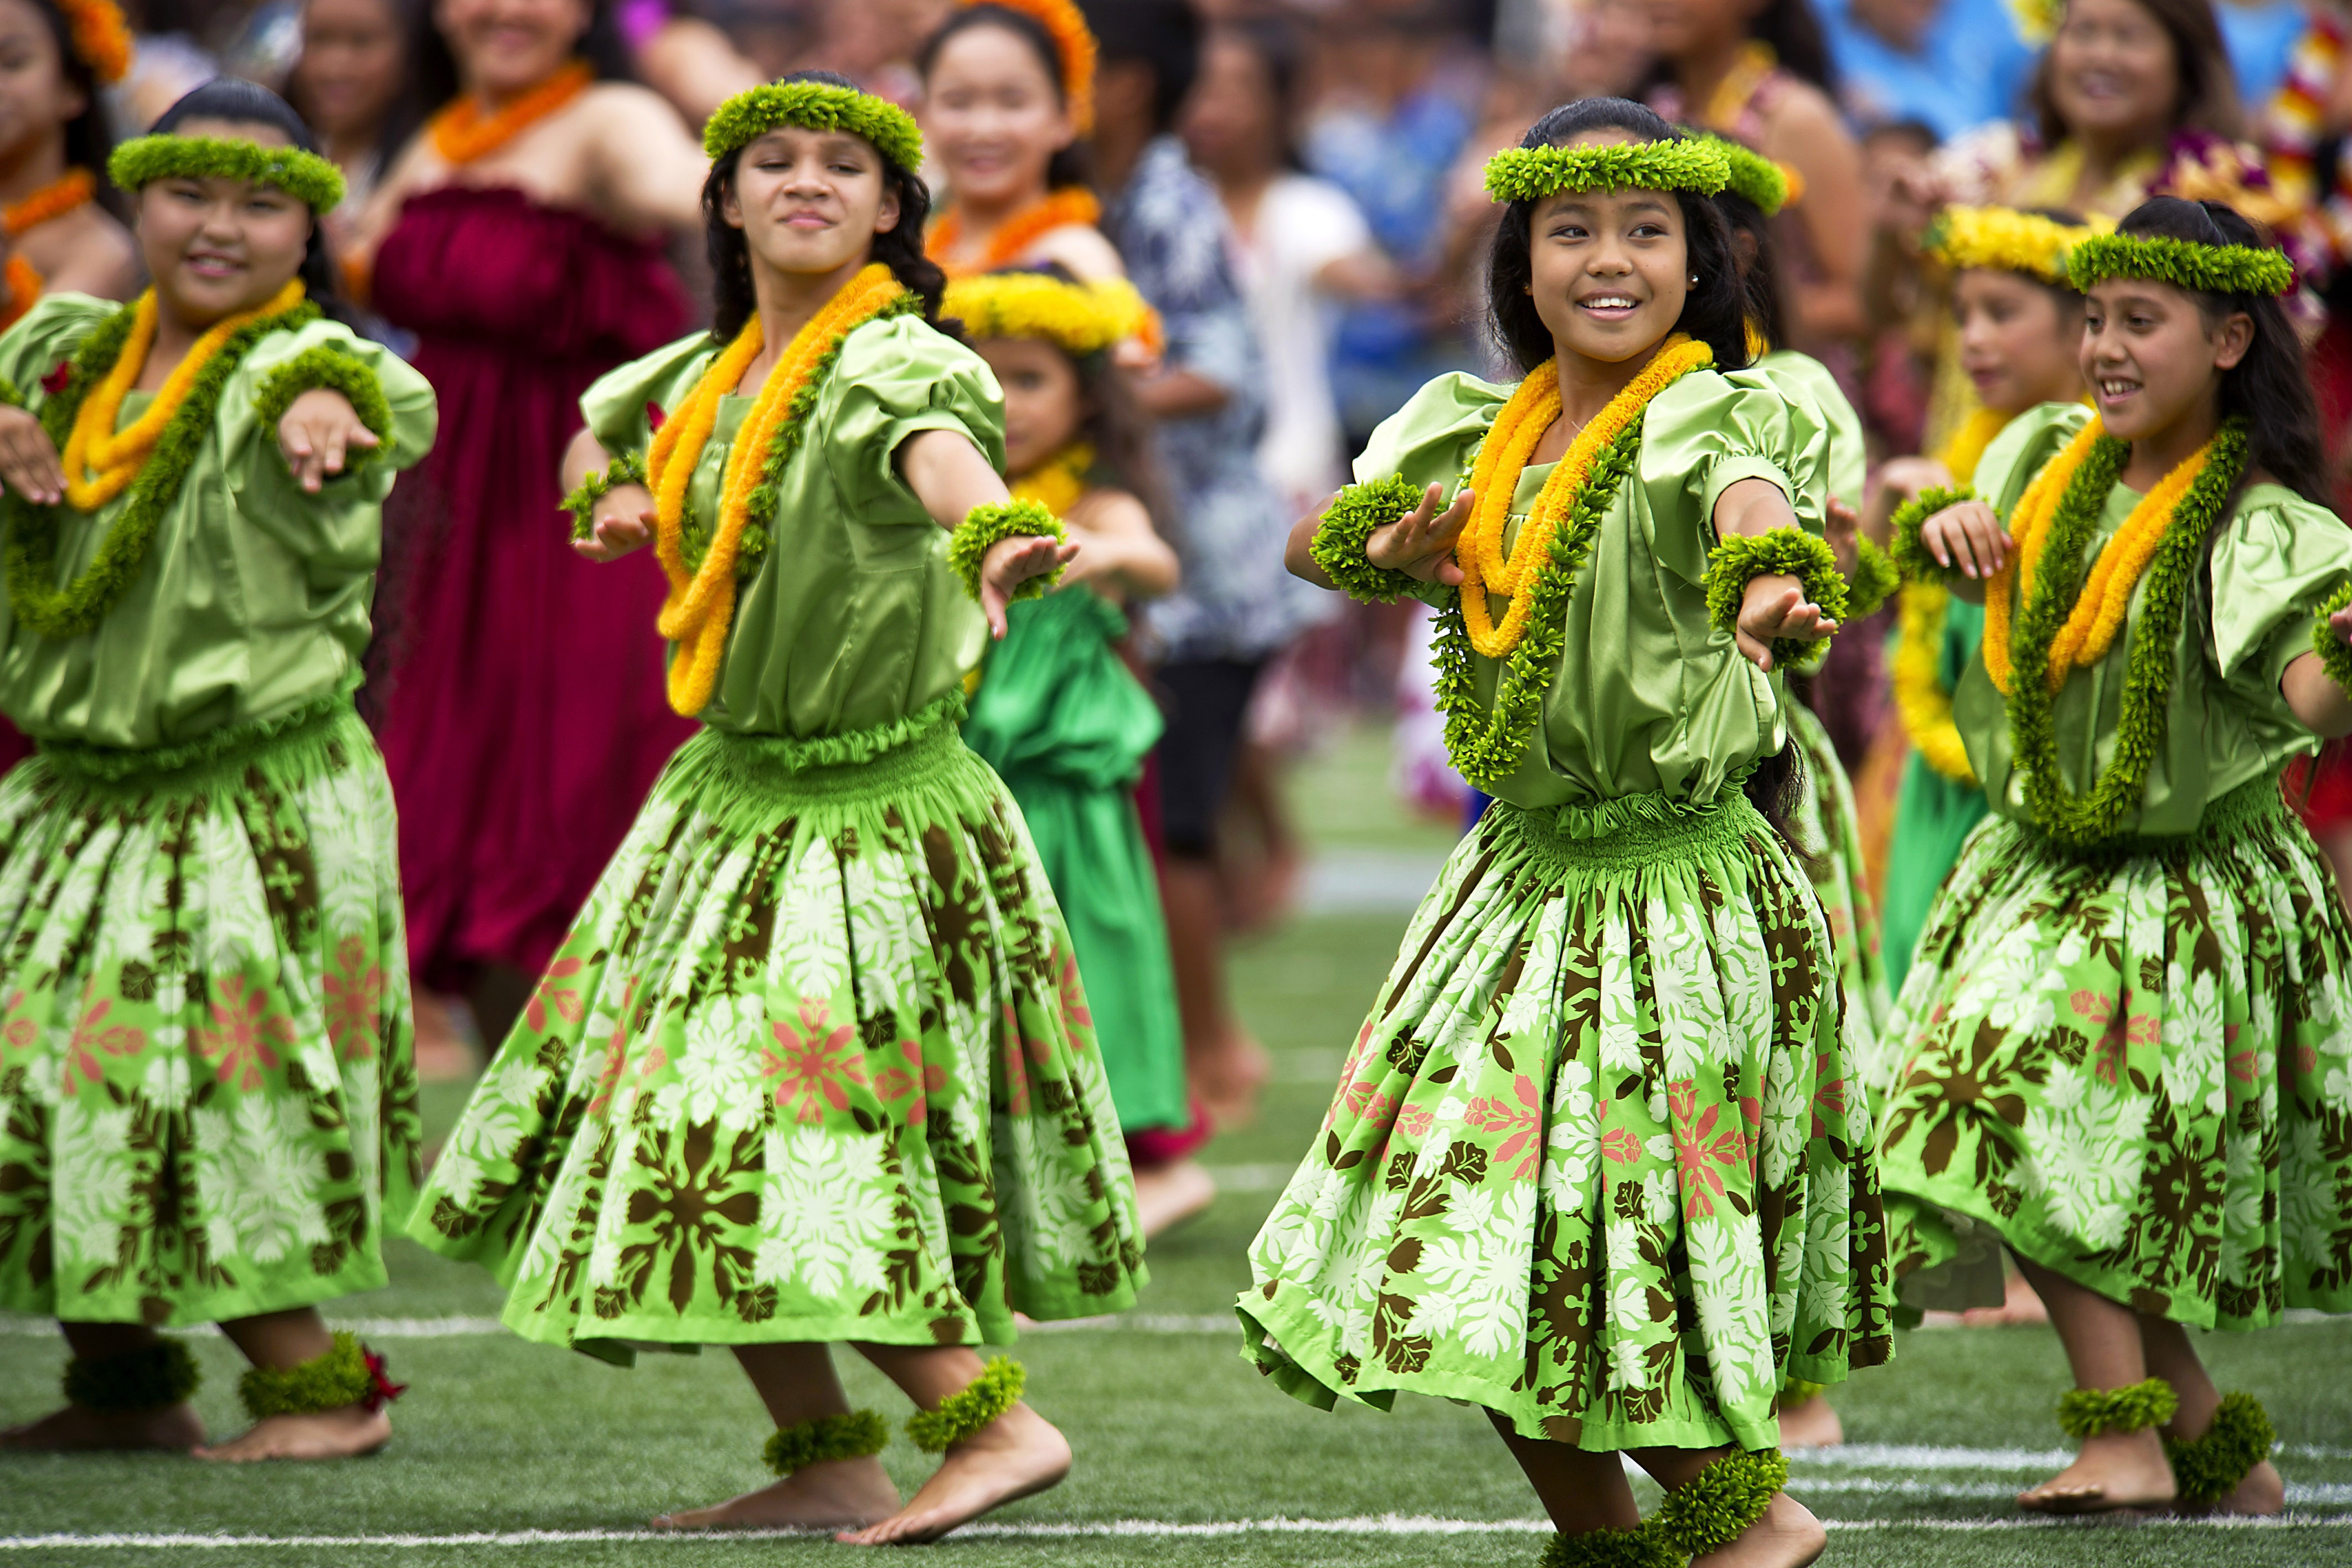 Traditional Dancers Hula Dance in Hawaii image - Free stock photo ...